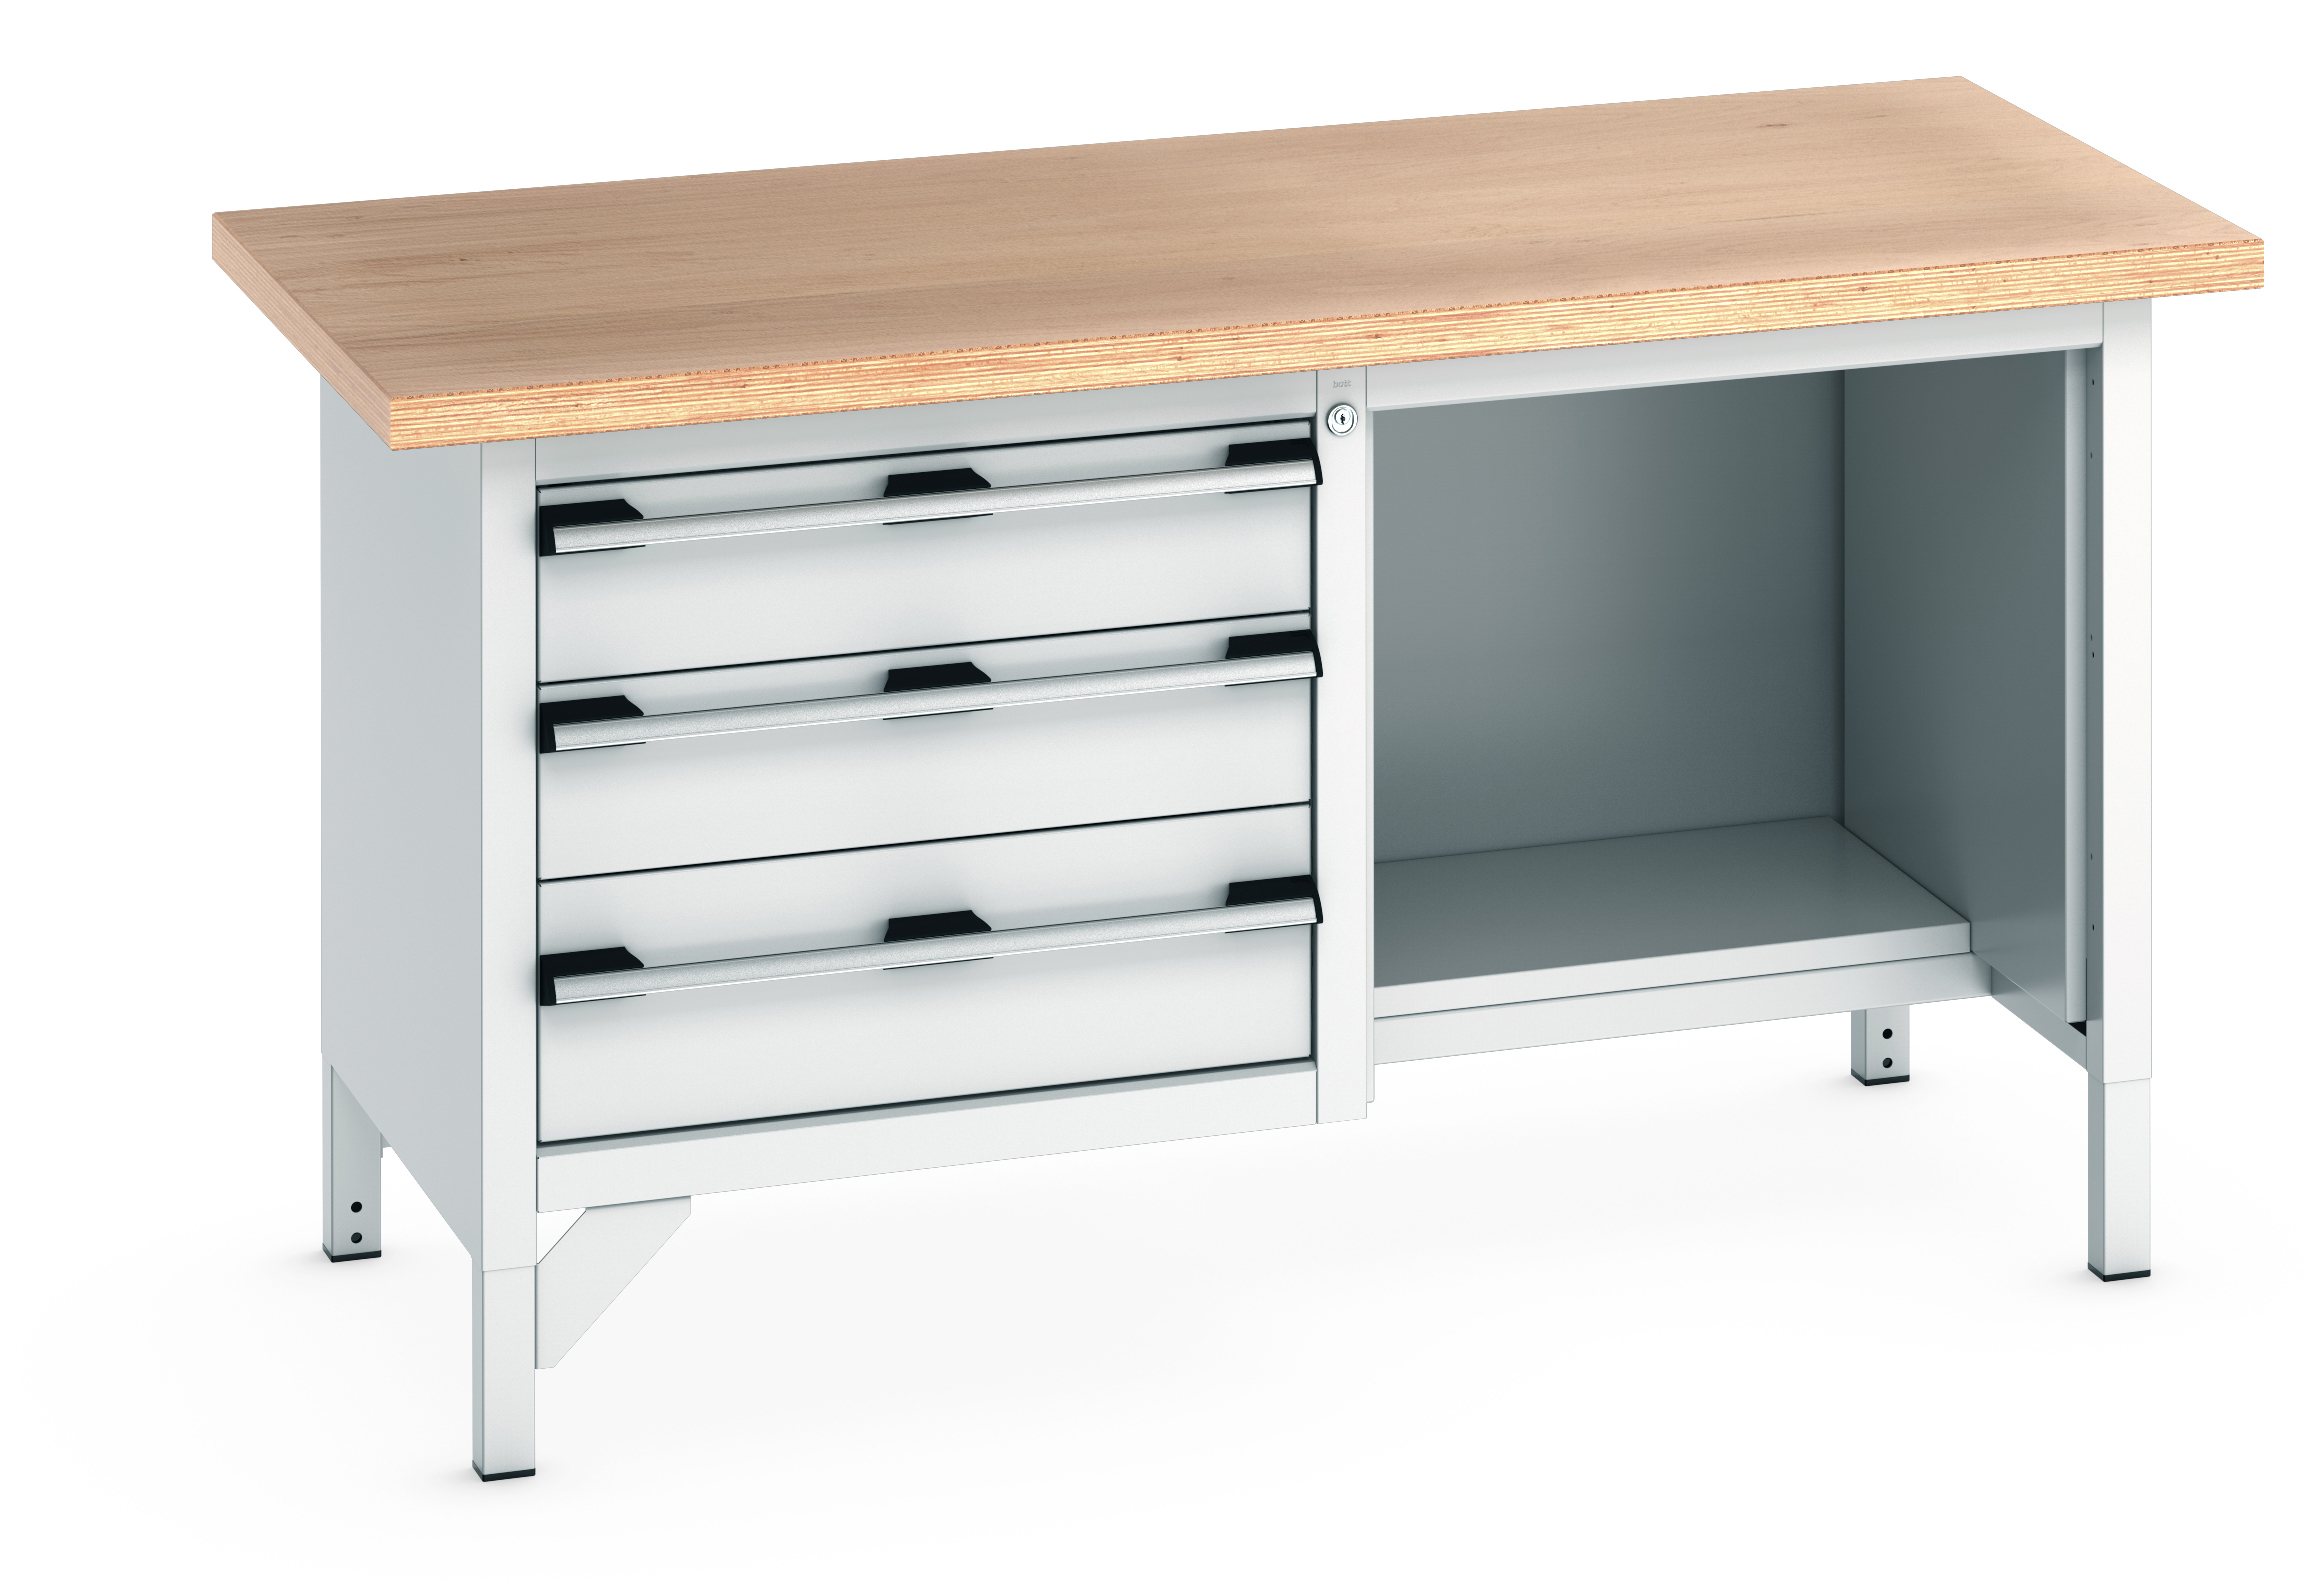 Bott Cubio Storage Bench With 3 Drawer Cabinet / Open With Half Depth Base Shelf - 41002040.16V